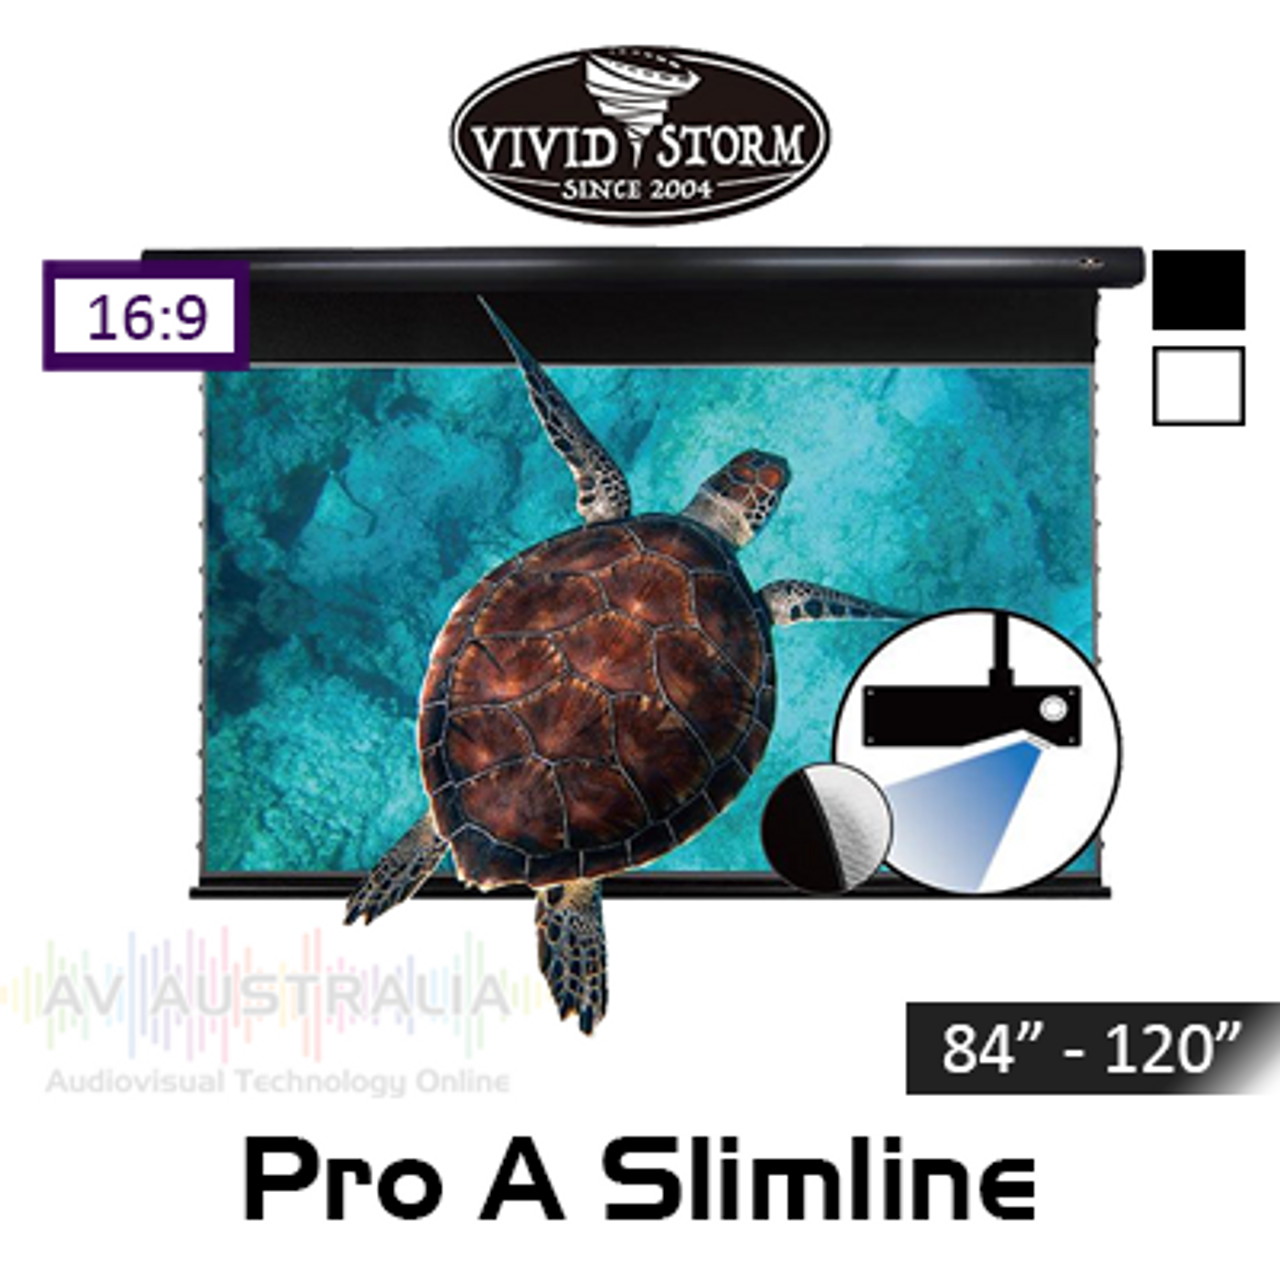 Vividstorm Pro A Slimline ALR UST Tab-Tension Motorised Projection Screens (84" - 120")